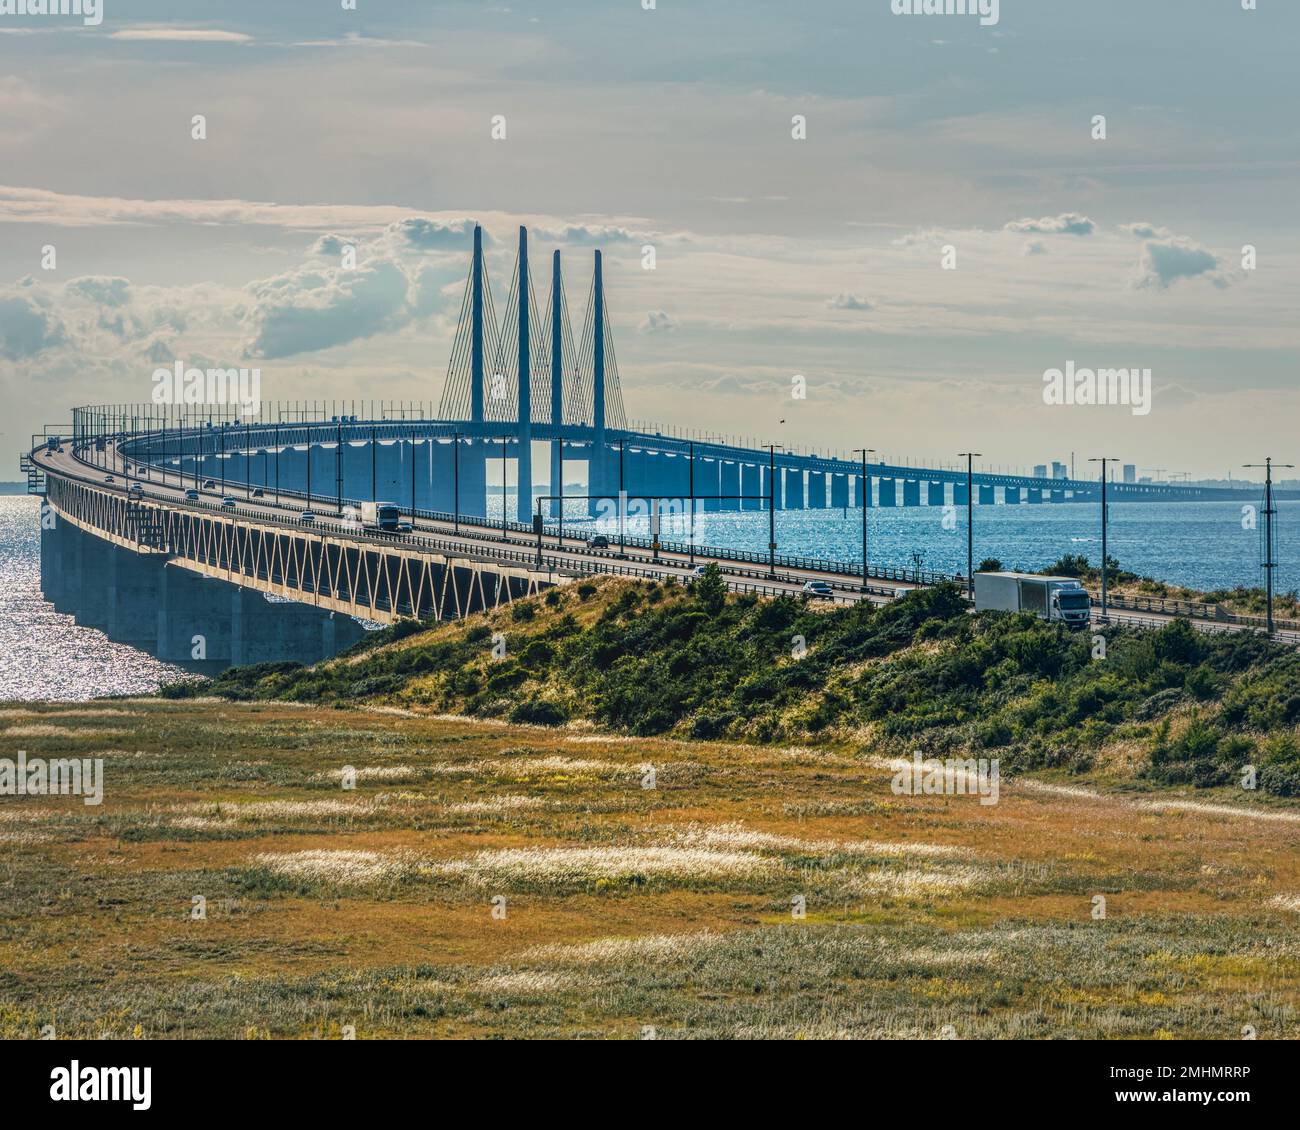 Oresundsbron or Oresund Bridge. Gigantic link between Sweden and Denmark allows nations interconnection via the Oresund channel across the Baltic sea Stock Photo